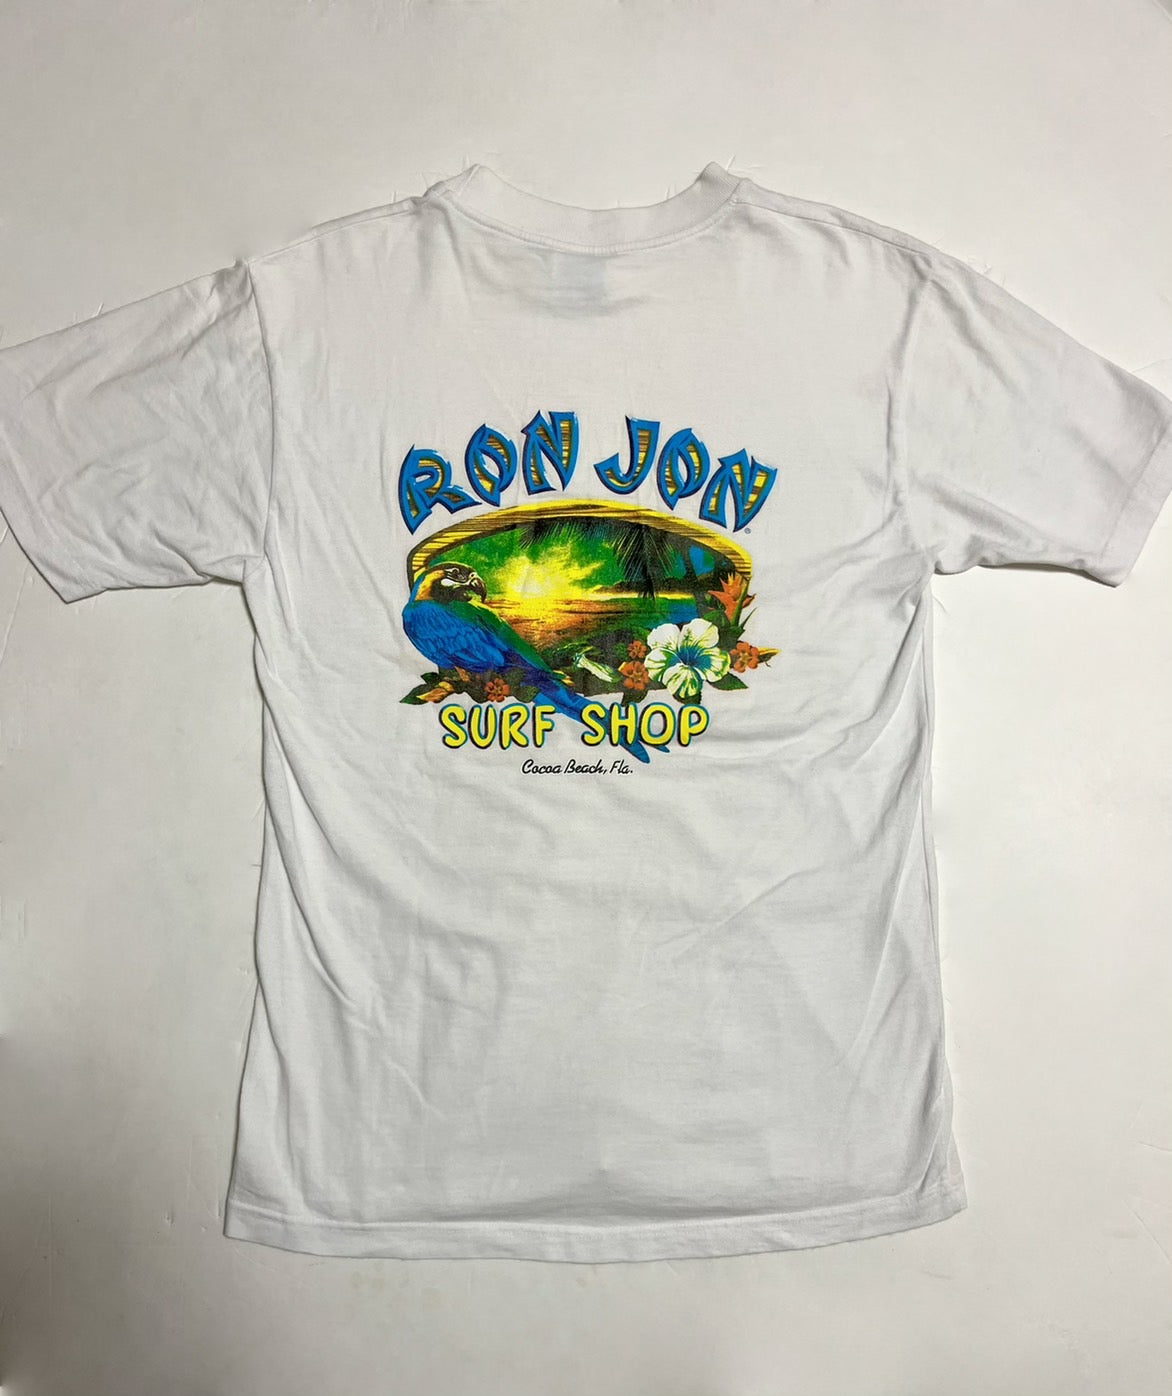 【USED】RonJon Surf Shop T-Shirt cocoa beach T-shirt (men's M)